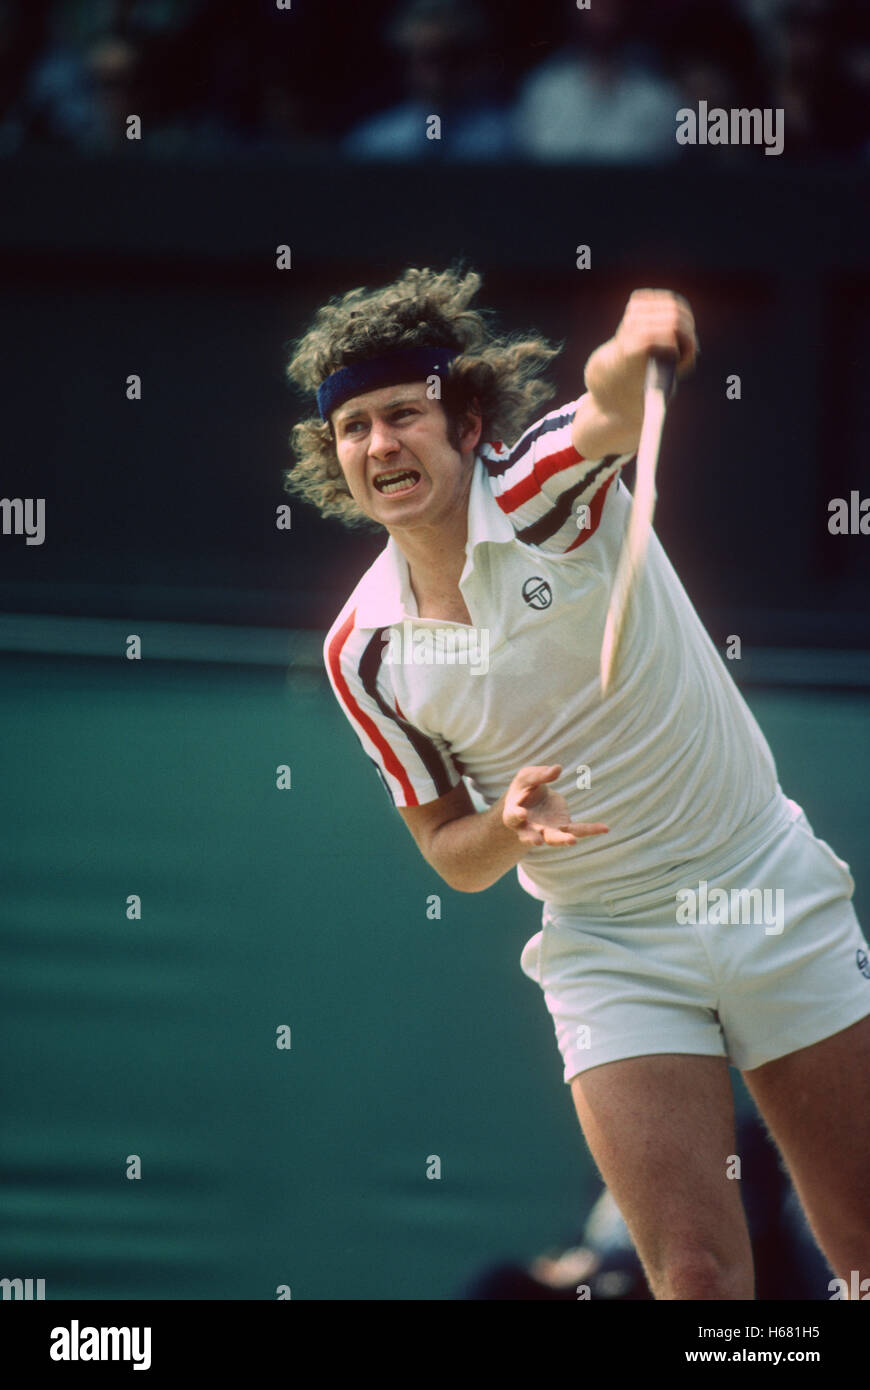 John McEnroe serving at Wimbledon, 1980 Stock Photo